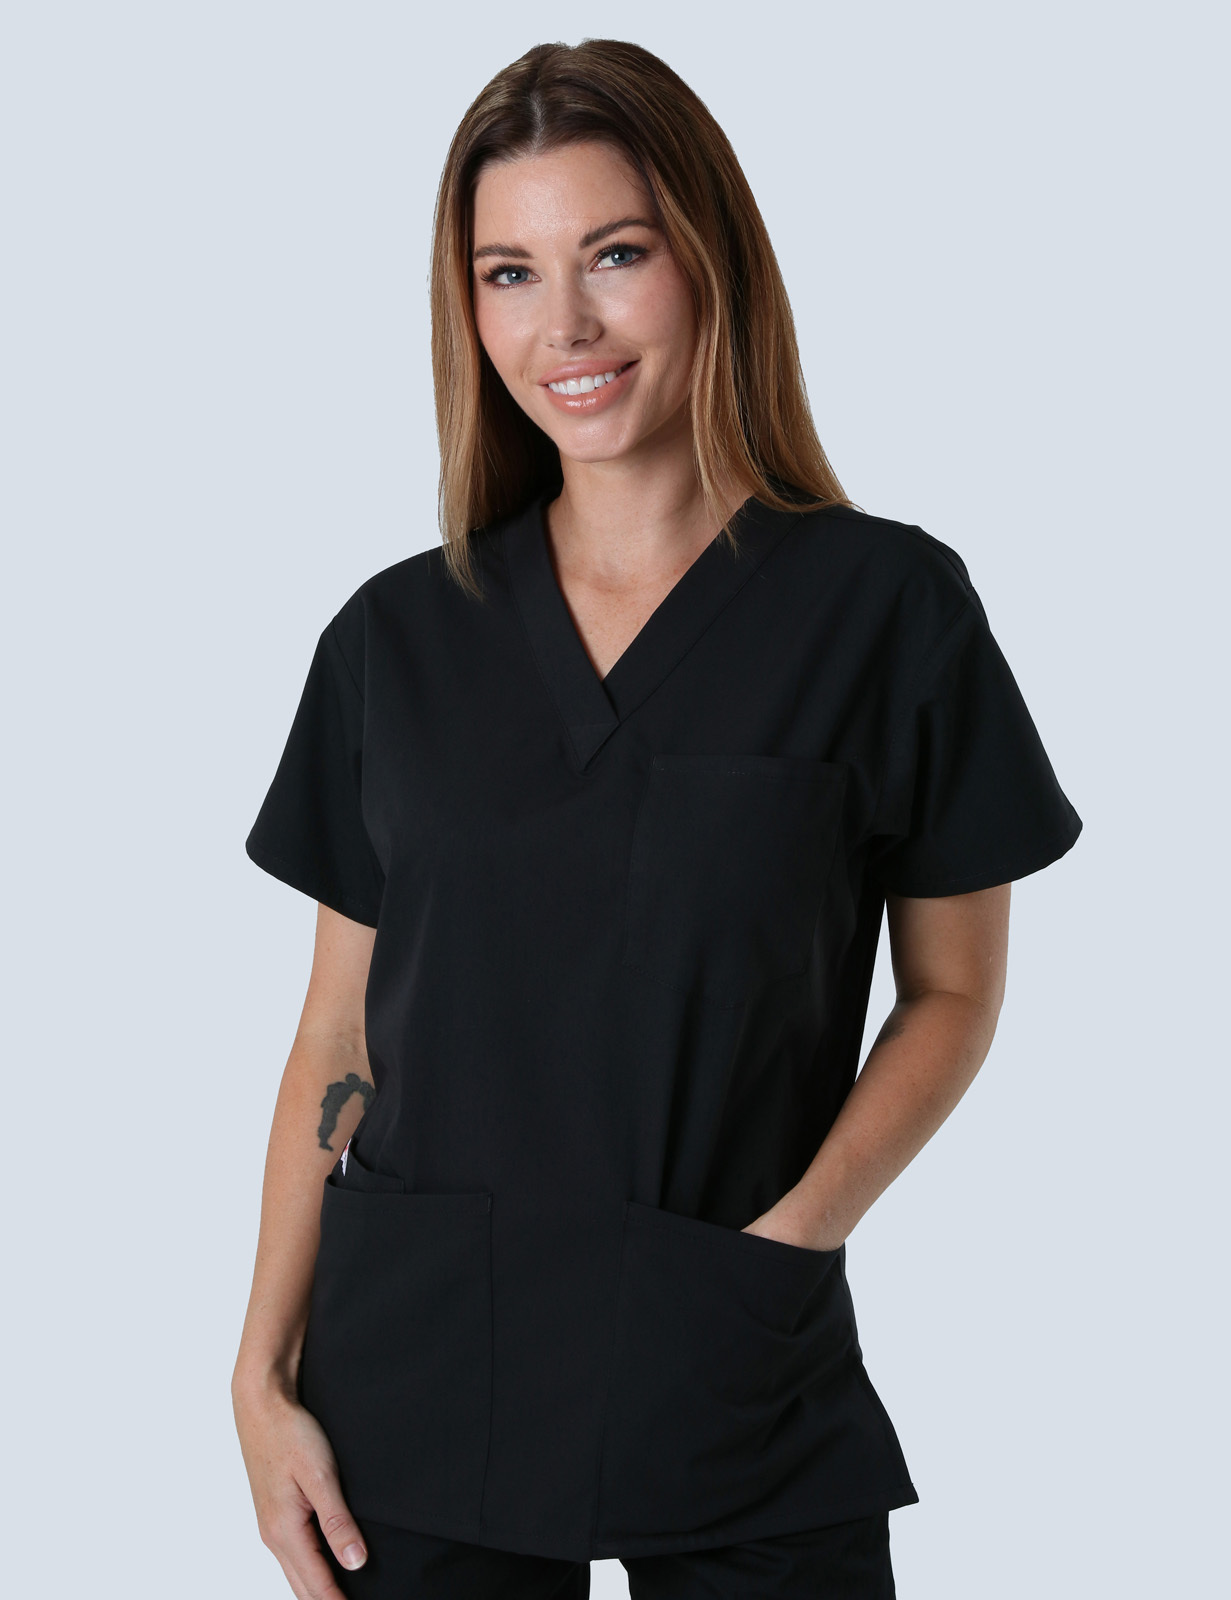 Mackay Hospital - Medical Imaging (4 Pocket Scrub Top and Cargo Pants in Black incl Logos)